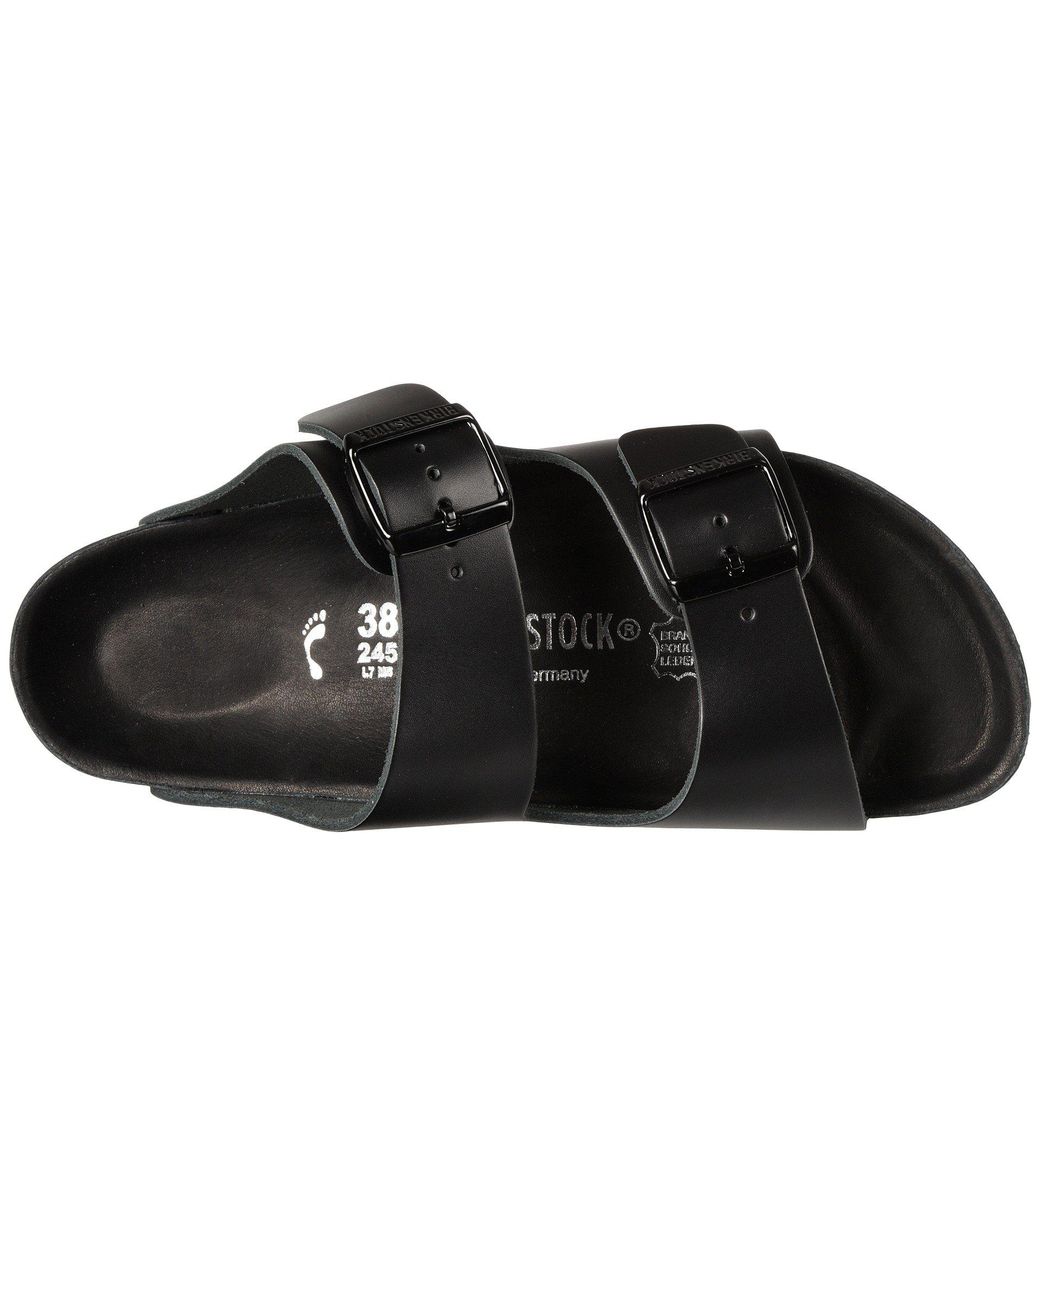 Birkenstock Leather Monterey Exquisite Premium Collection Shoes in Black |  Lyst